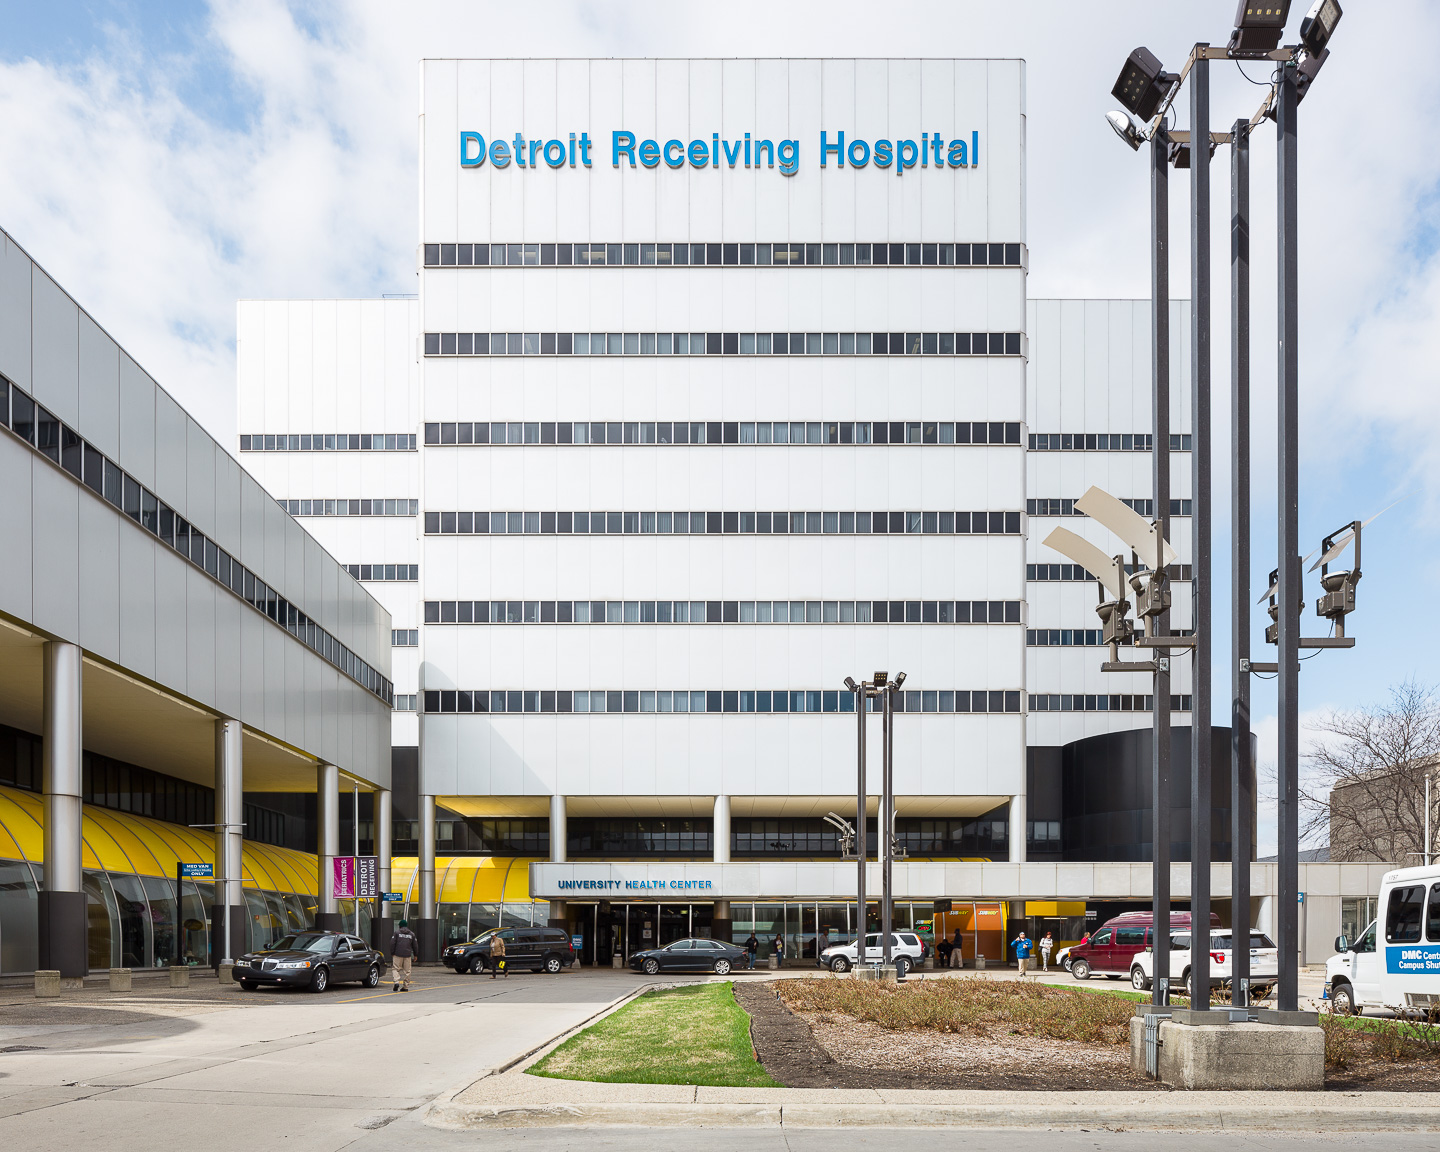 Detroit Receiving Hospital by William Kessler. Photo by Jason R. Woods.